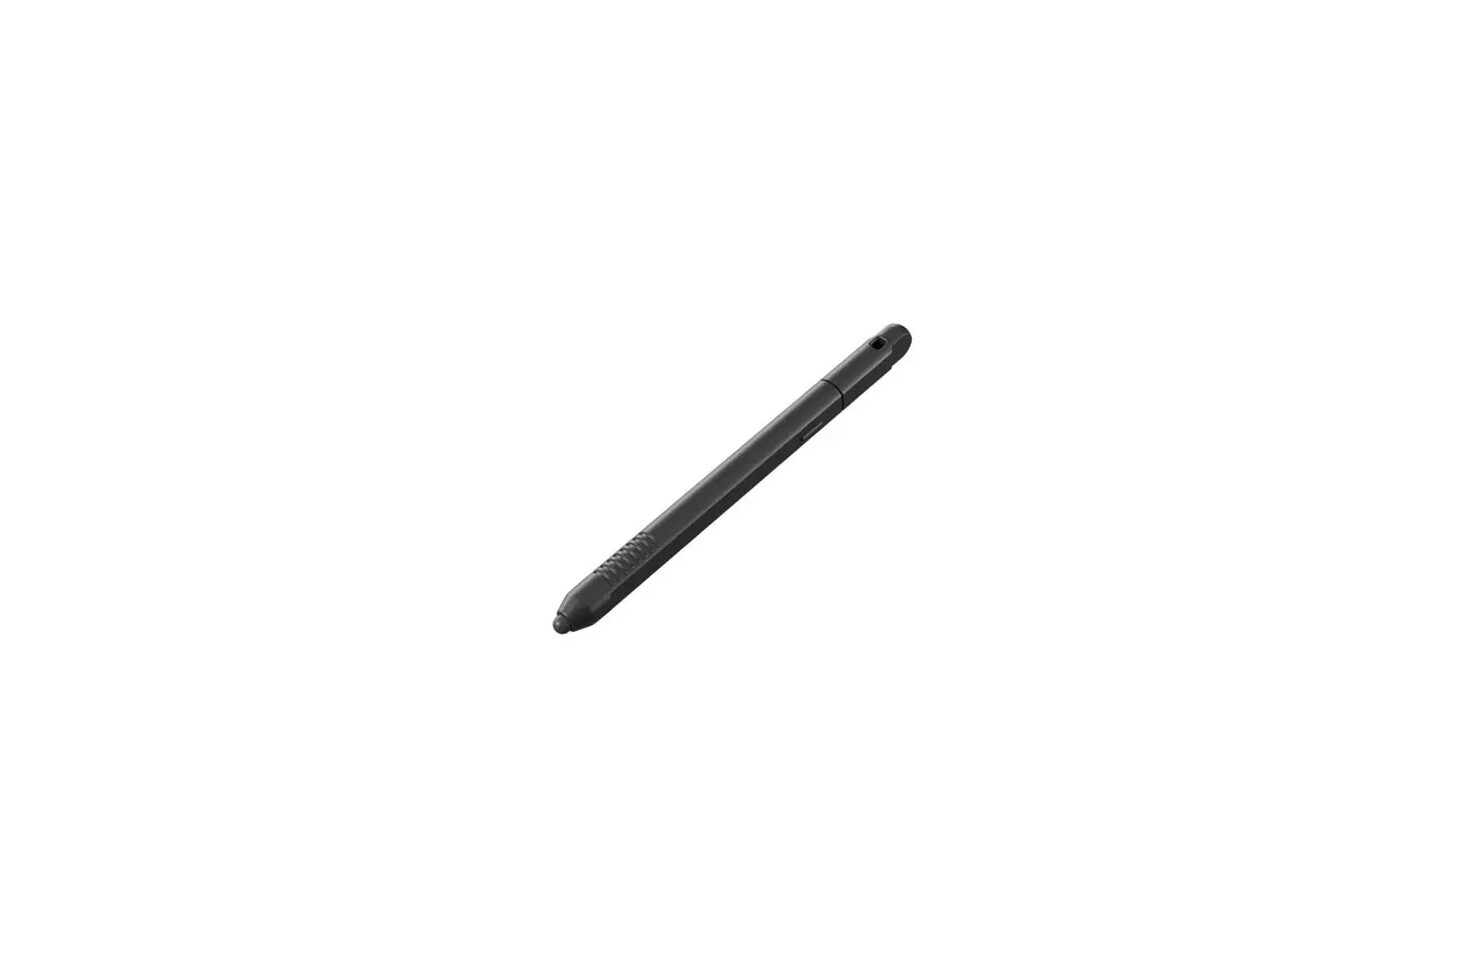 CF-VNP025U | Panasonic Passive Stylus Pen